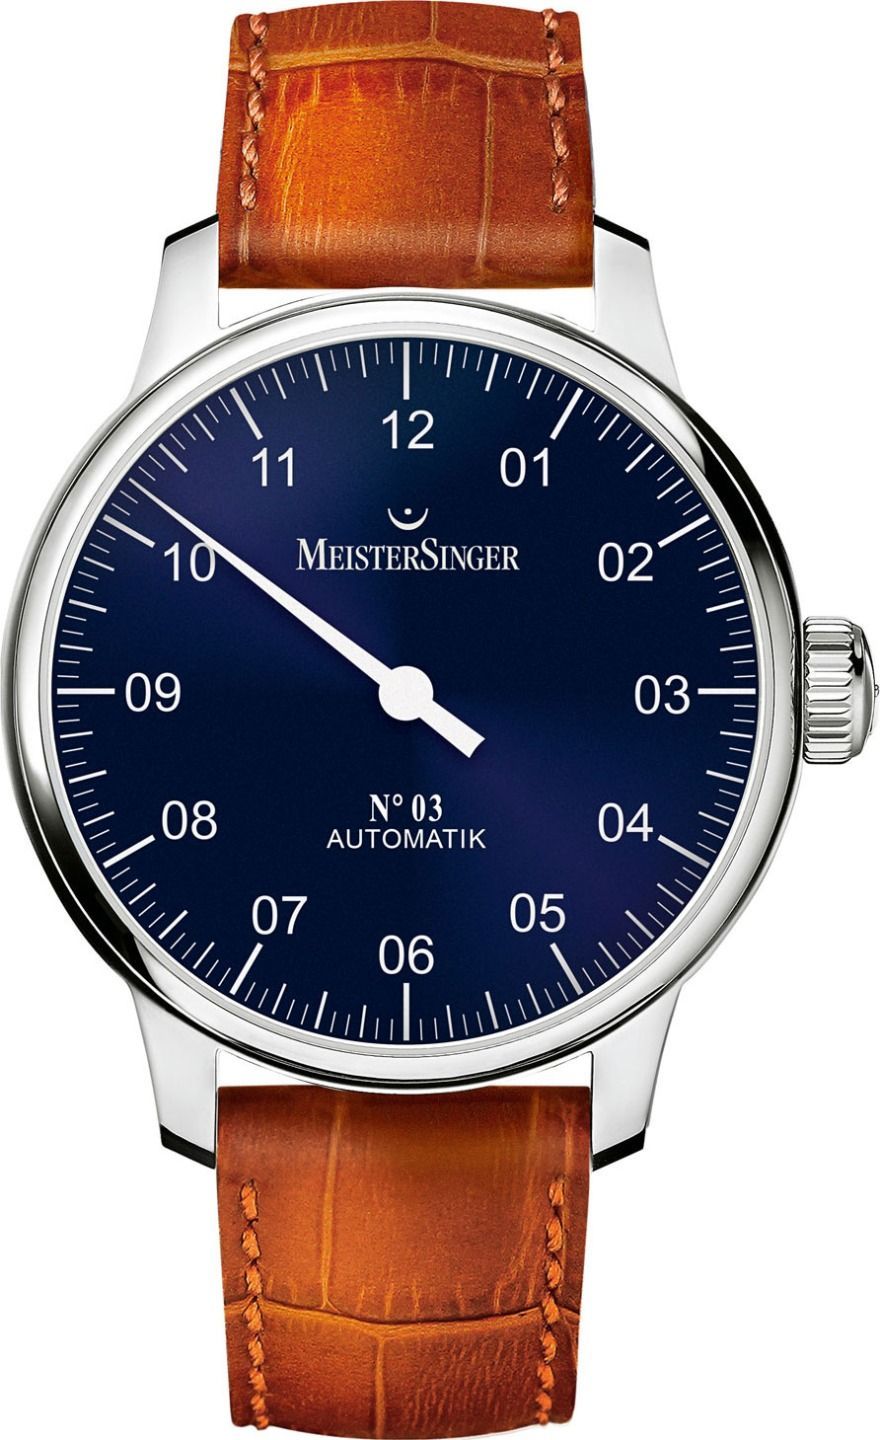 MeisterSinger No.03 43 mm Watch in Blue Dial For Men - 1